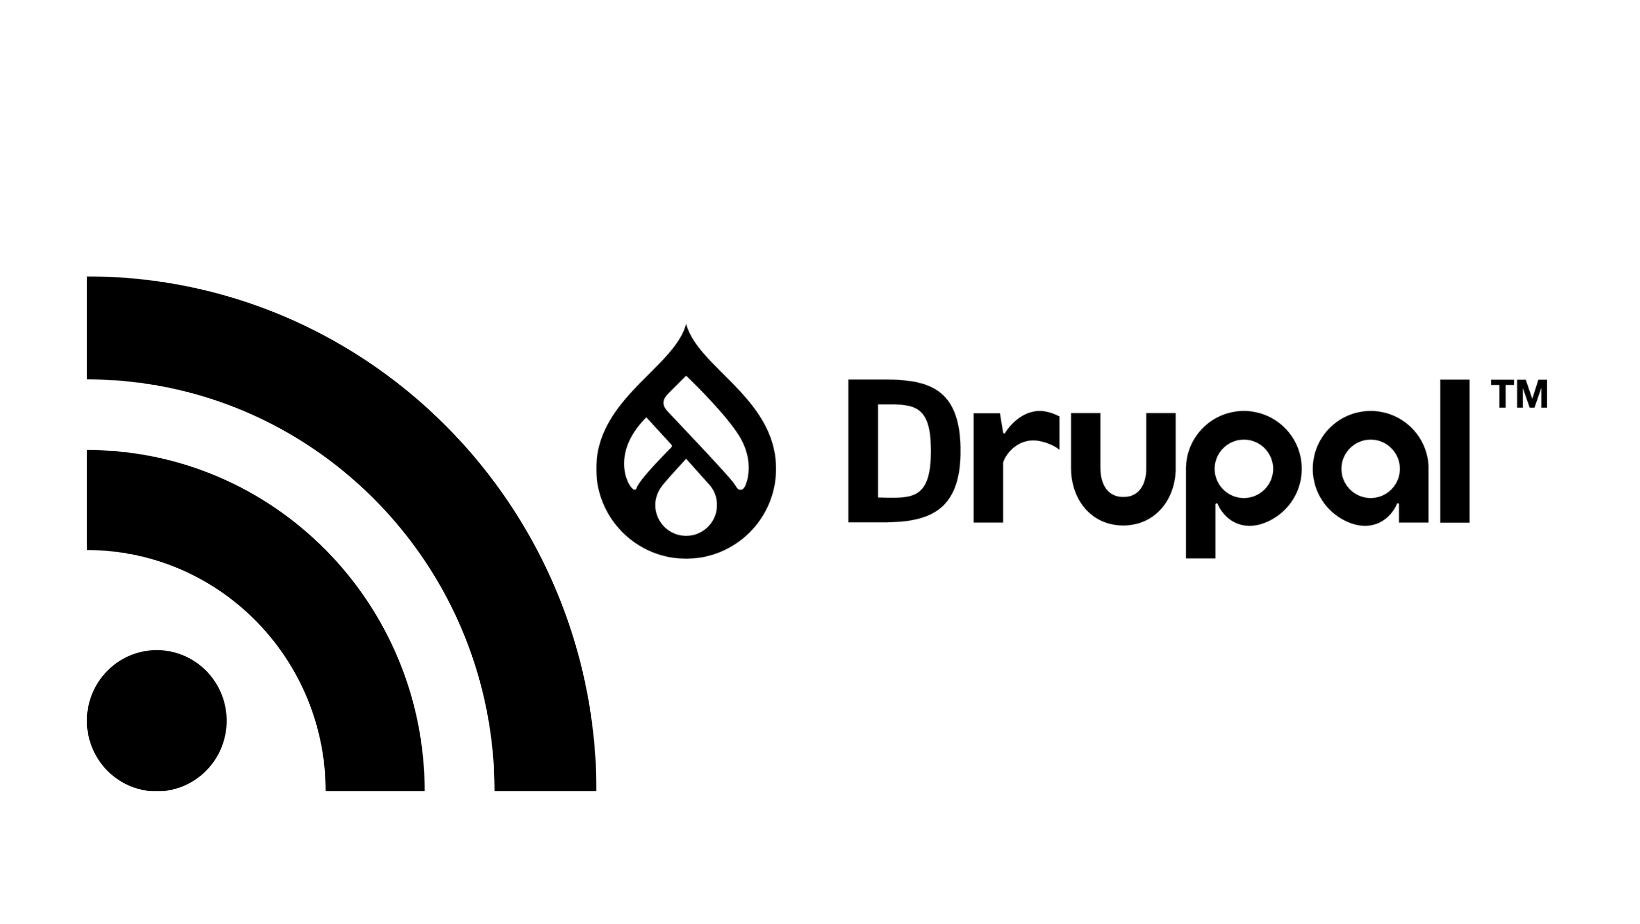 RSS logo and Drupal logo.